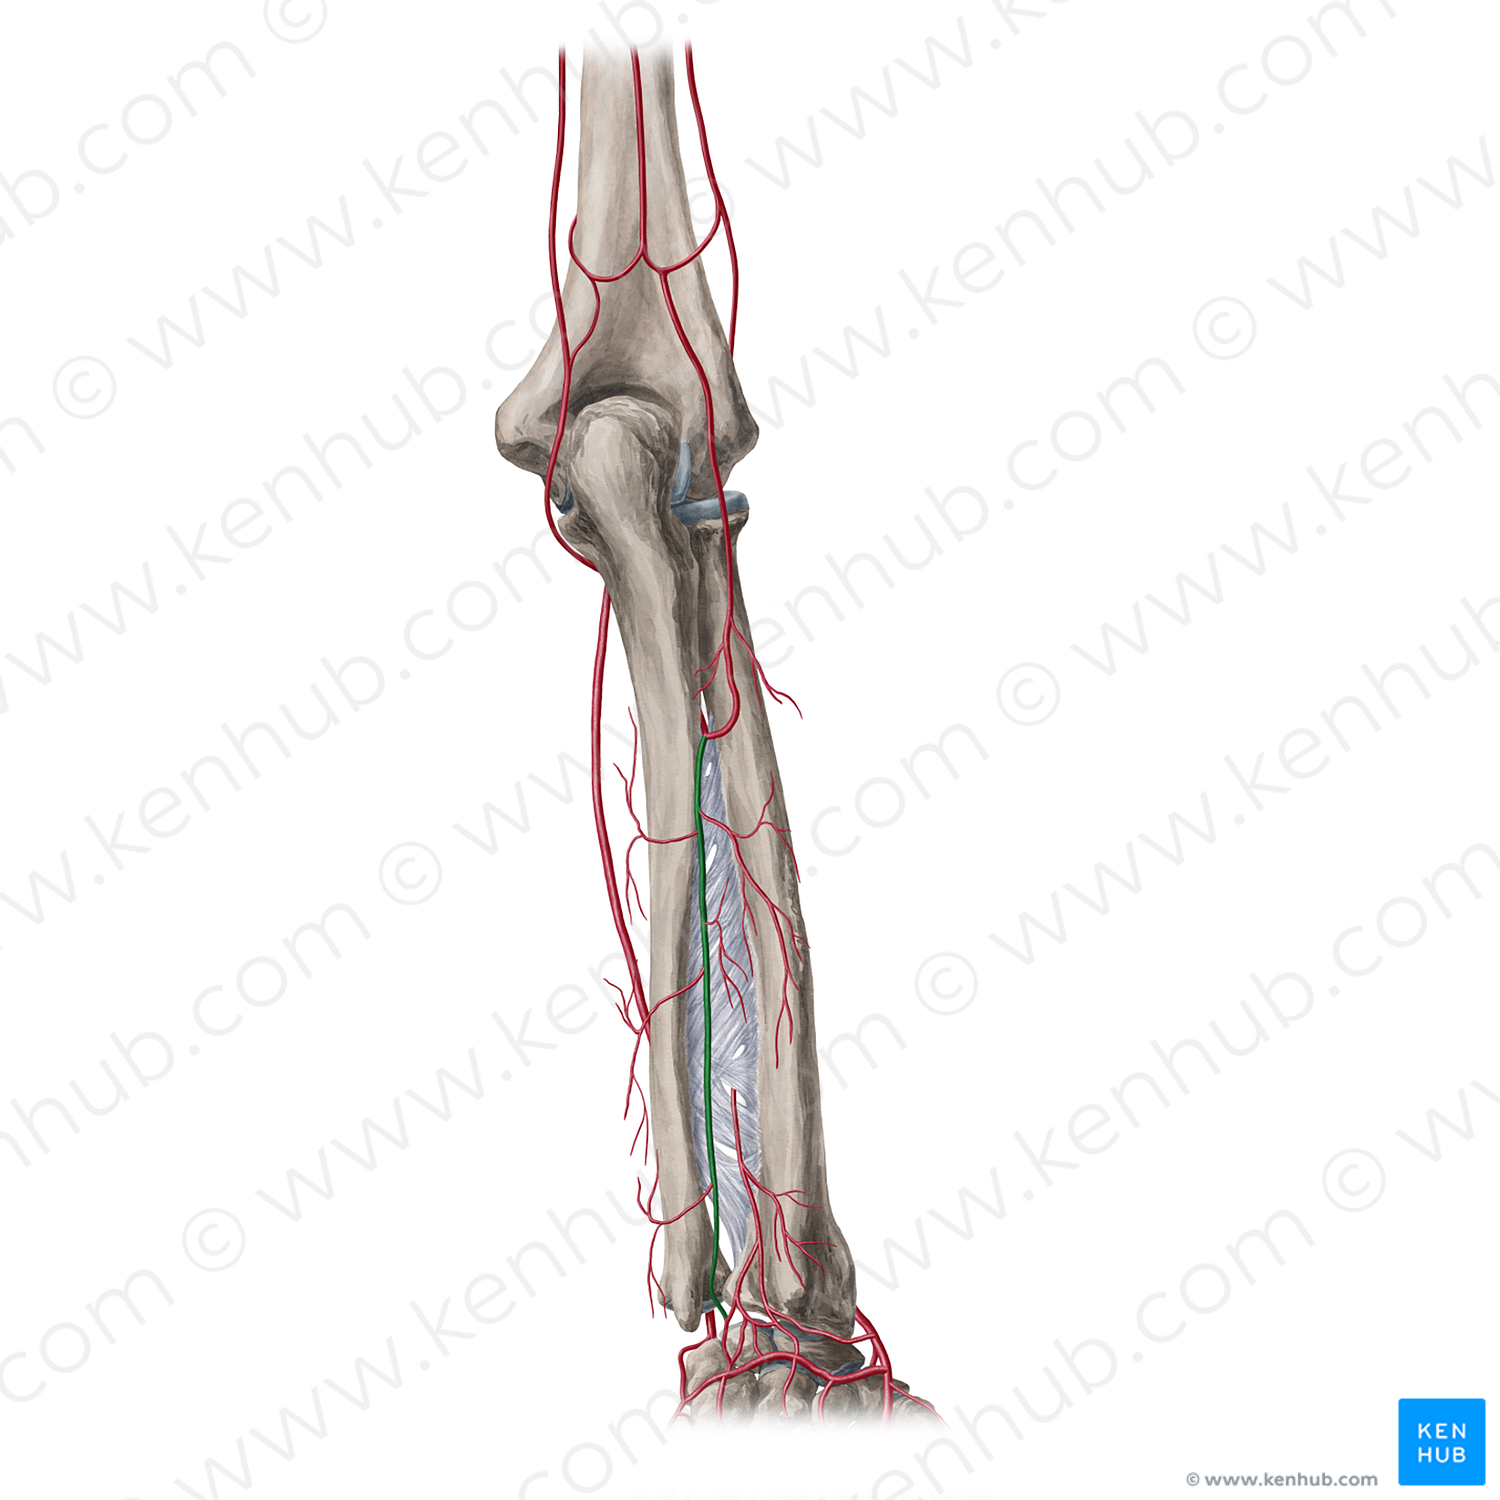 Posterior interosseous artery (#1457)